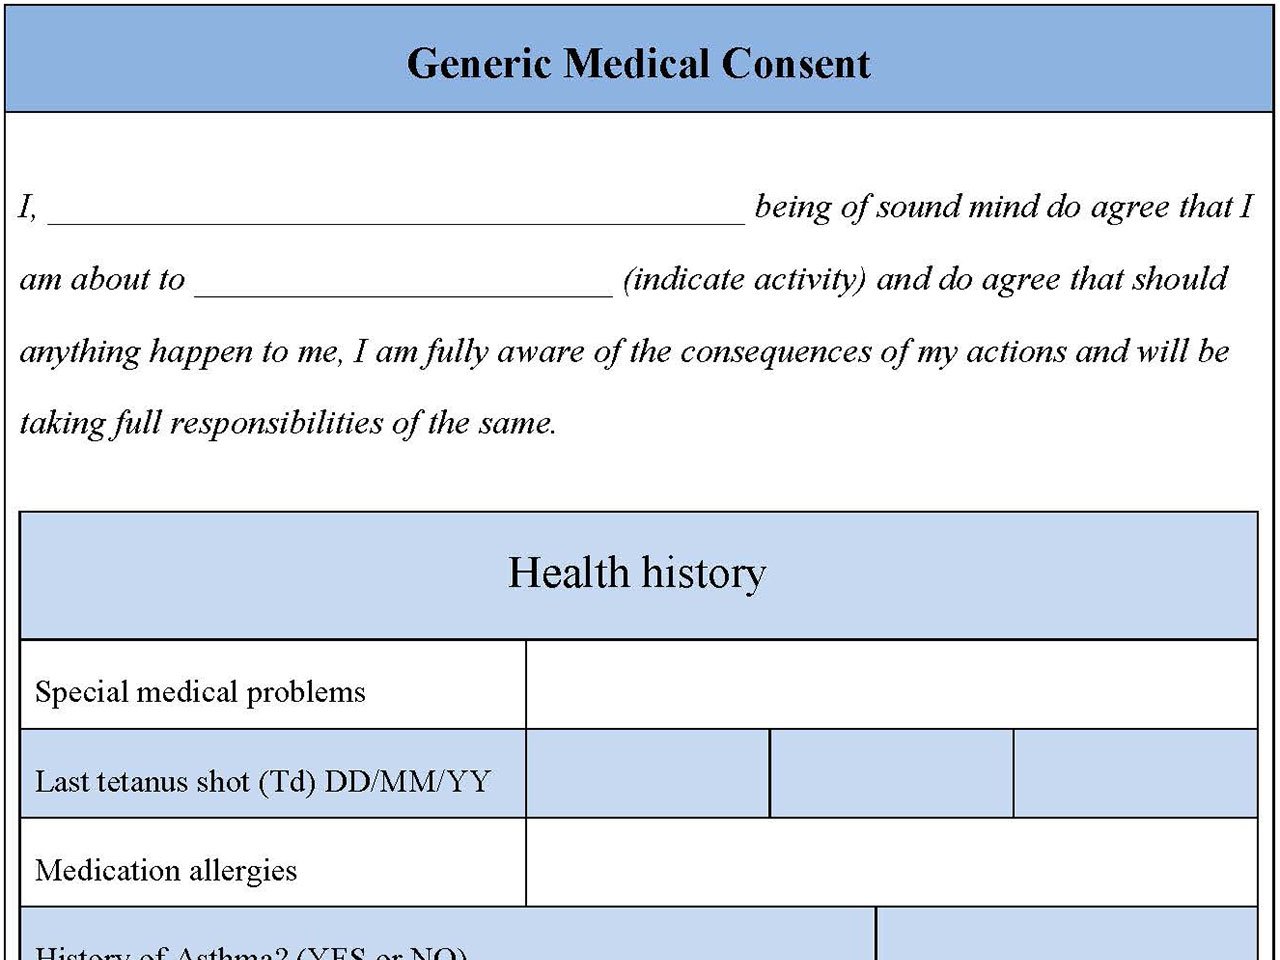 Generic Medical Consent Form